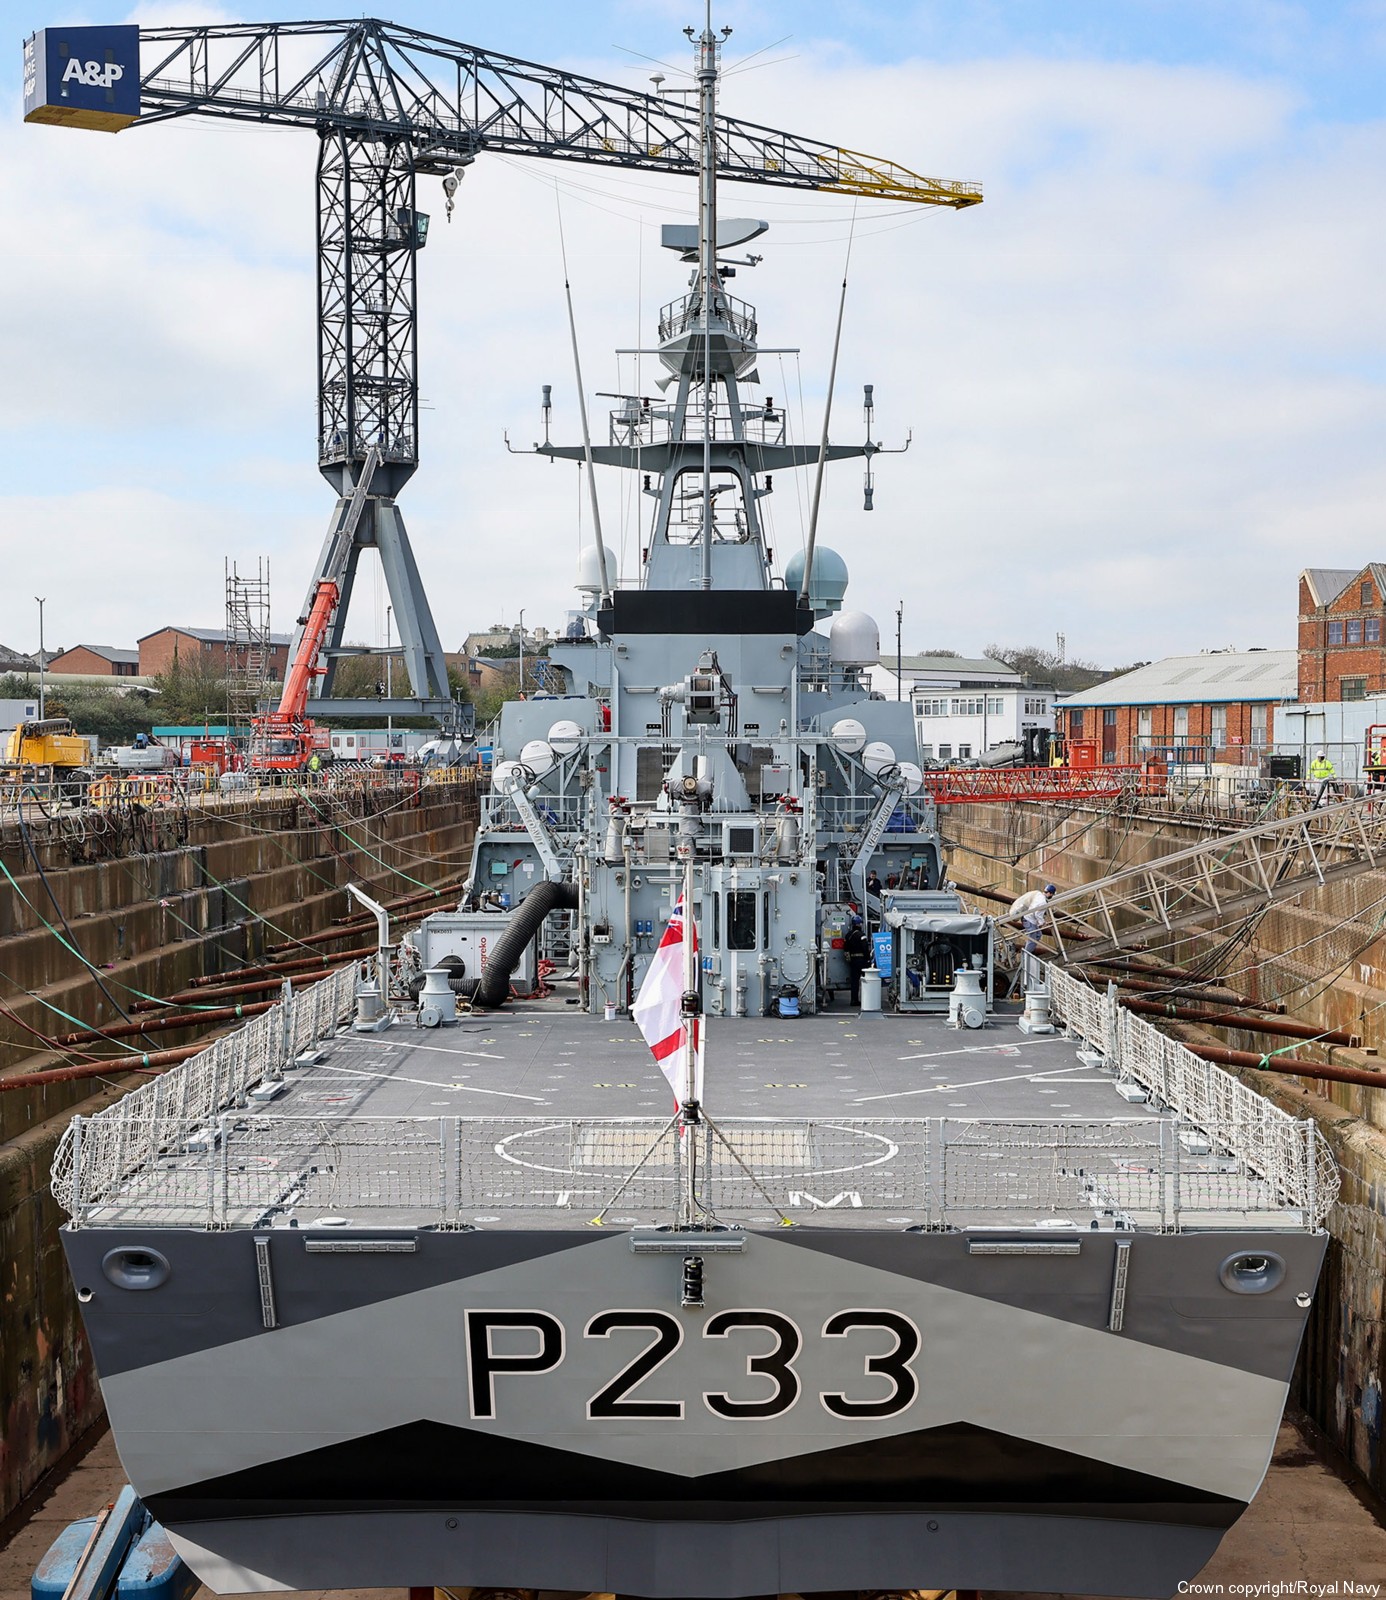 p233 hms tamar river class offshore patrol vessel opv royal navy 23